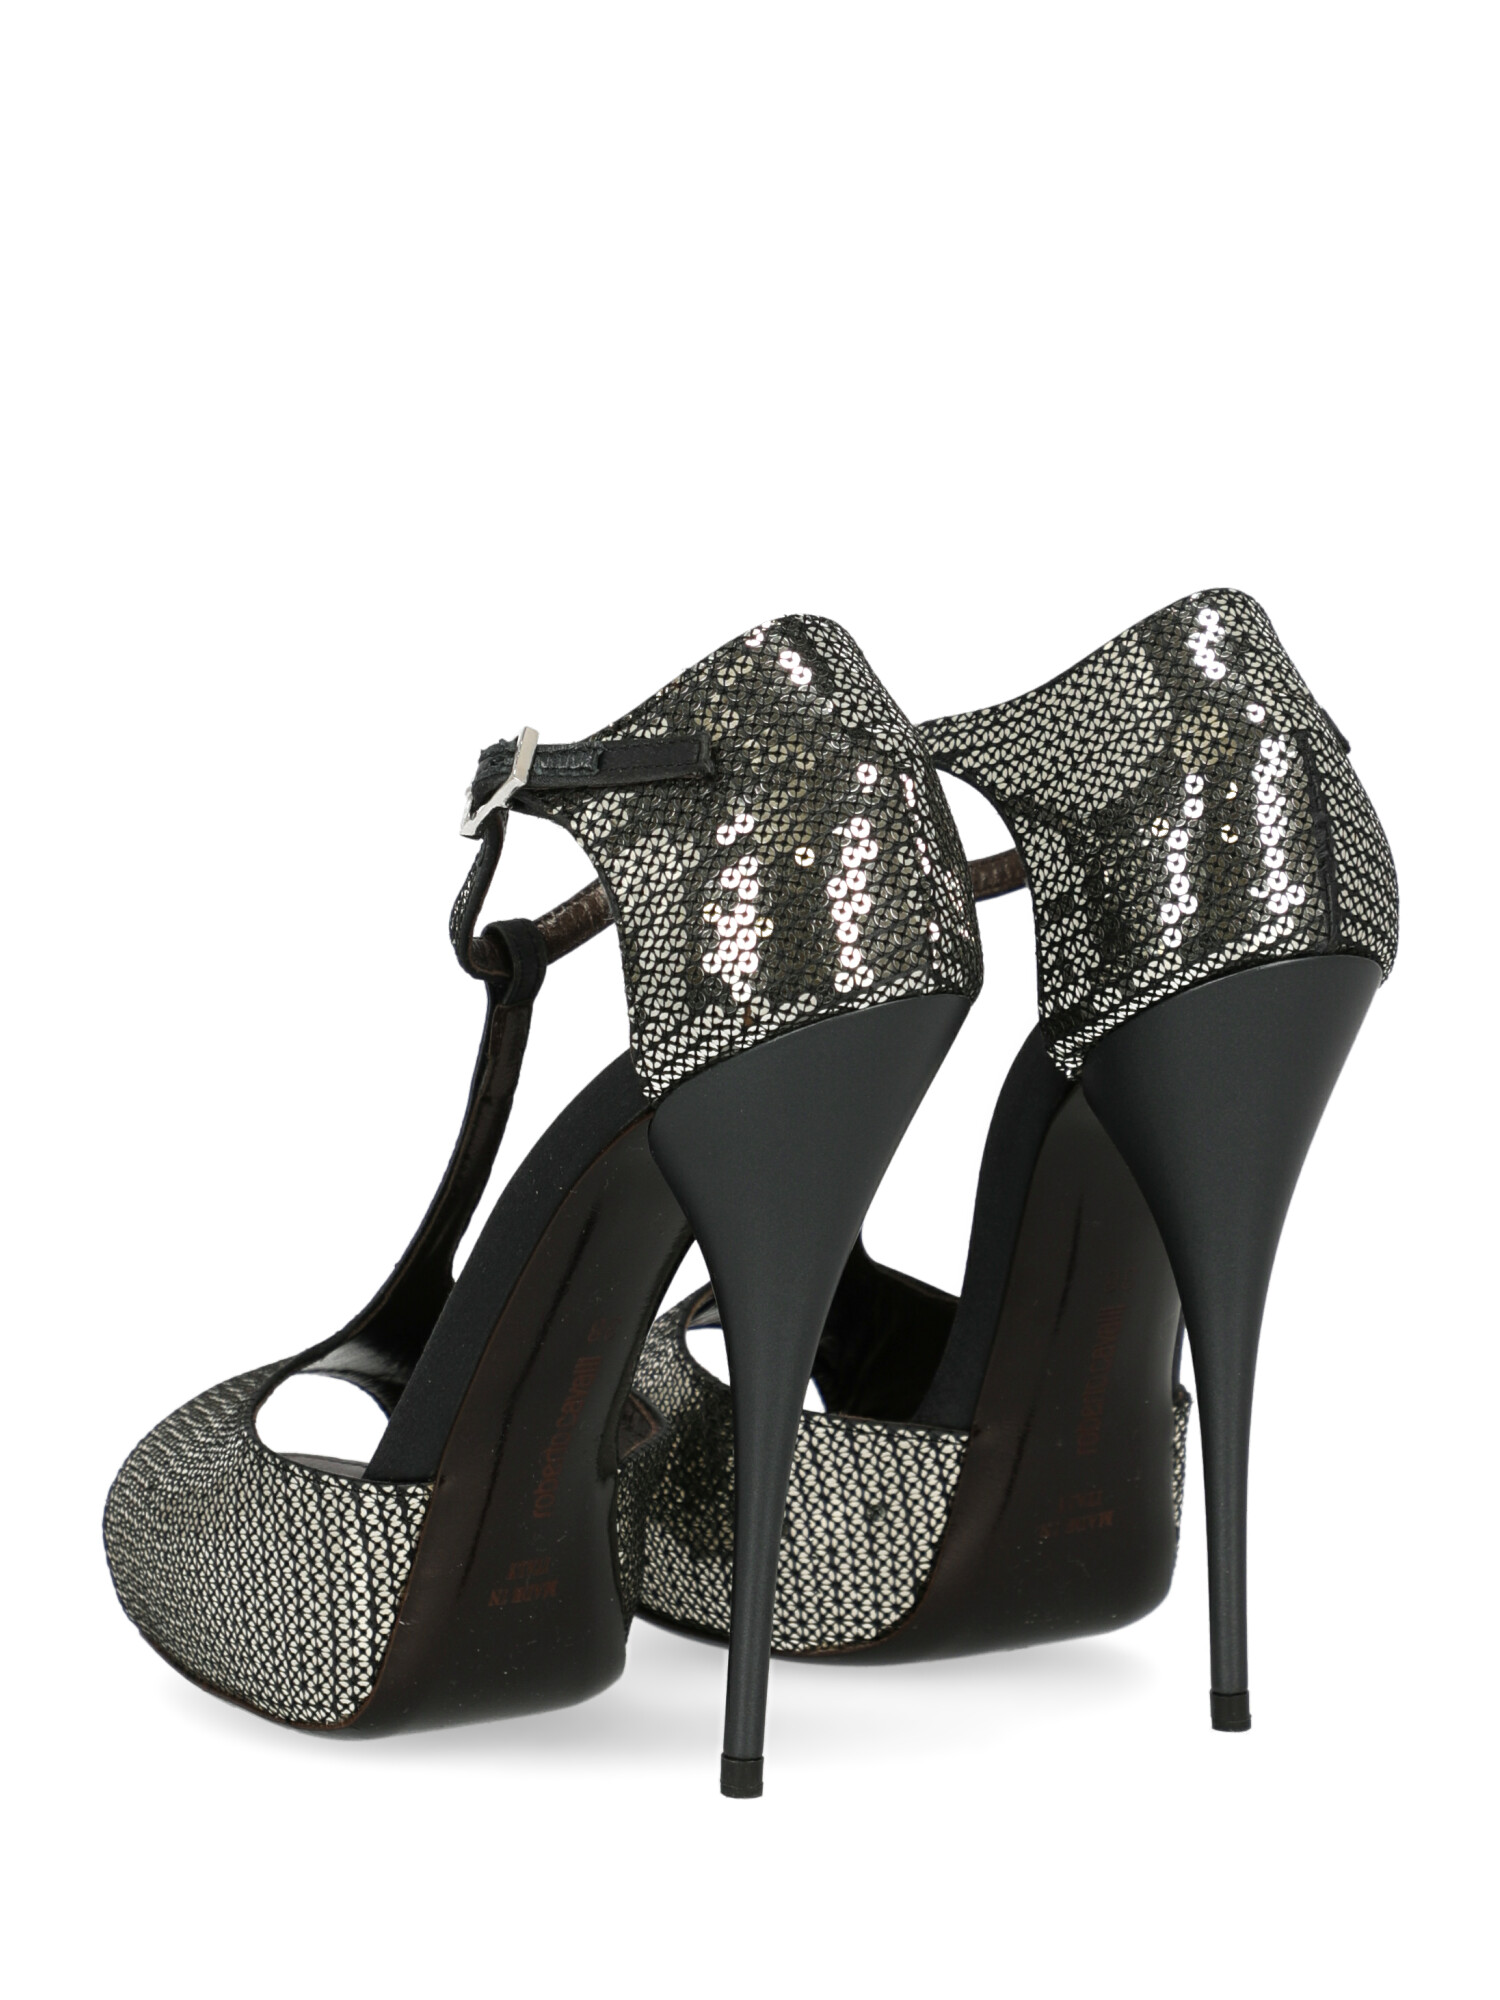 Roberto Cavalli Special Price Women Shoes Sandals Silver IT 38 | eBay